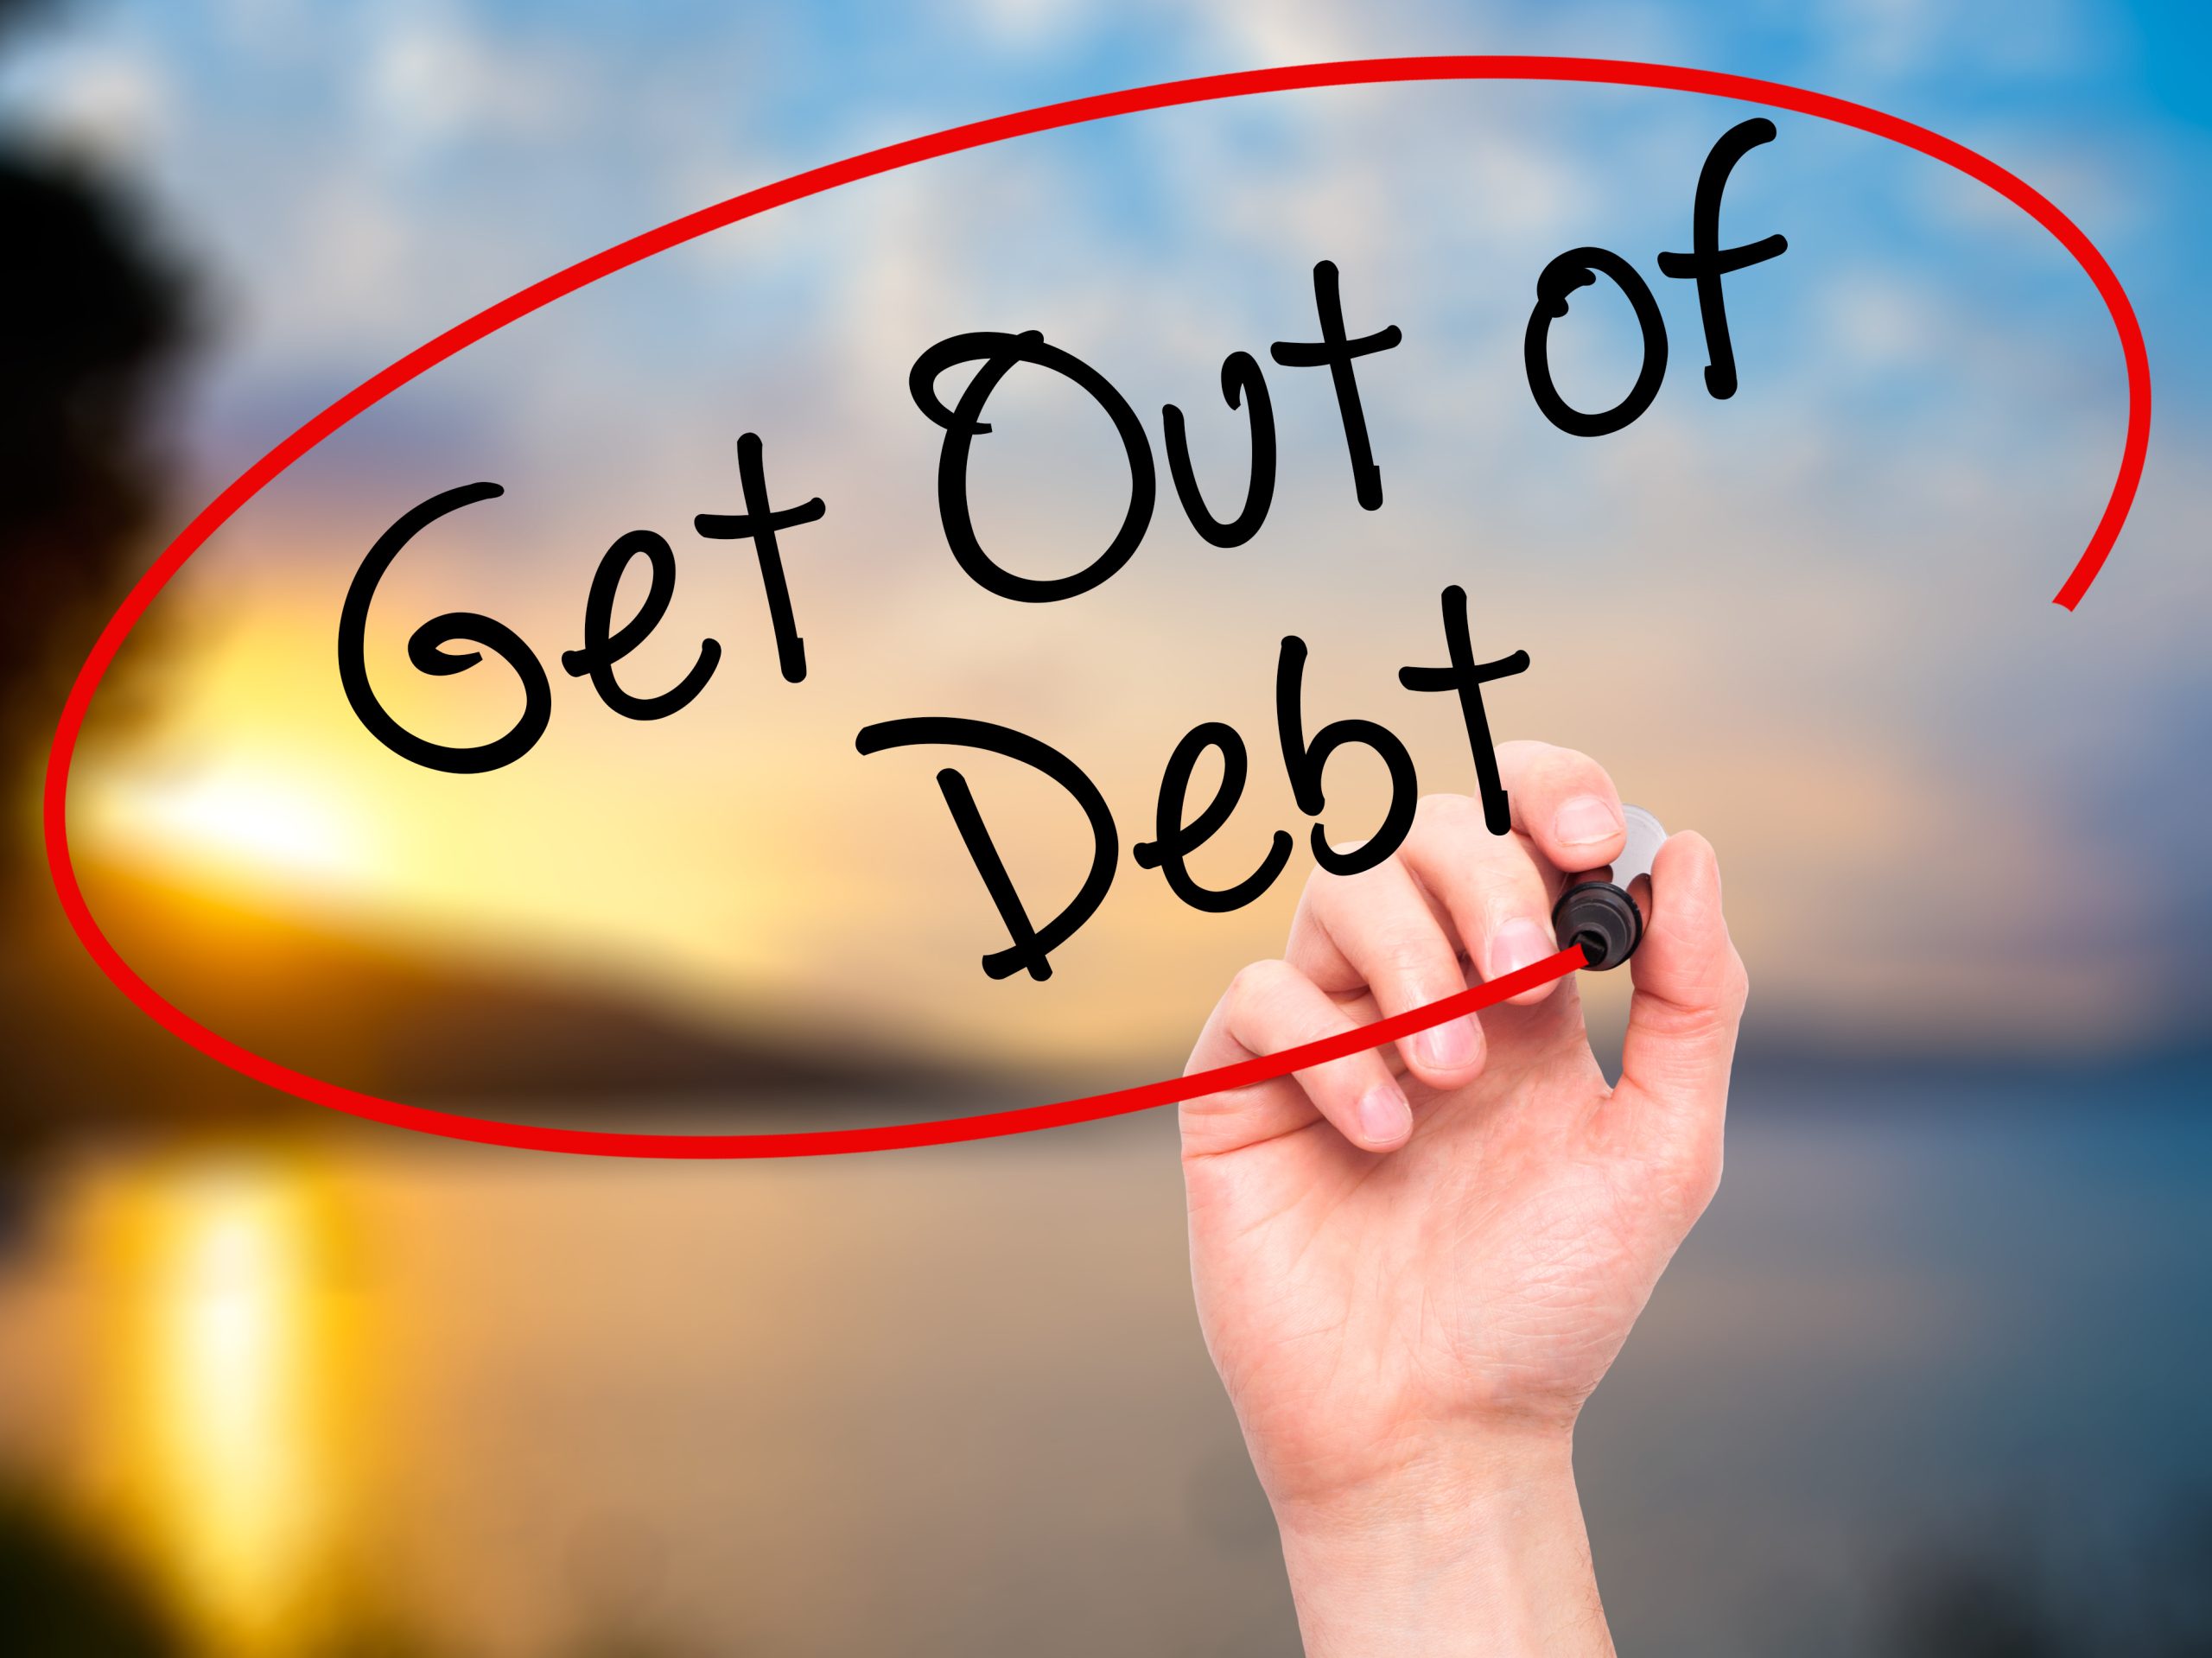 Why-Live-In-Debt-GetOutOFDebt